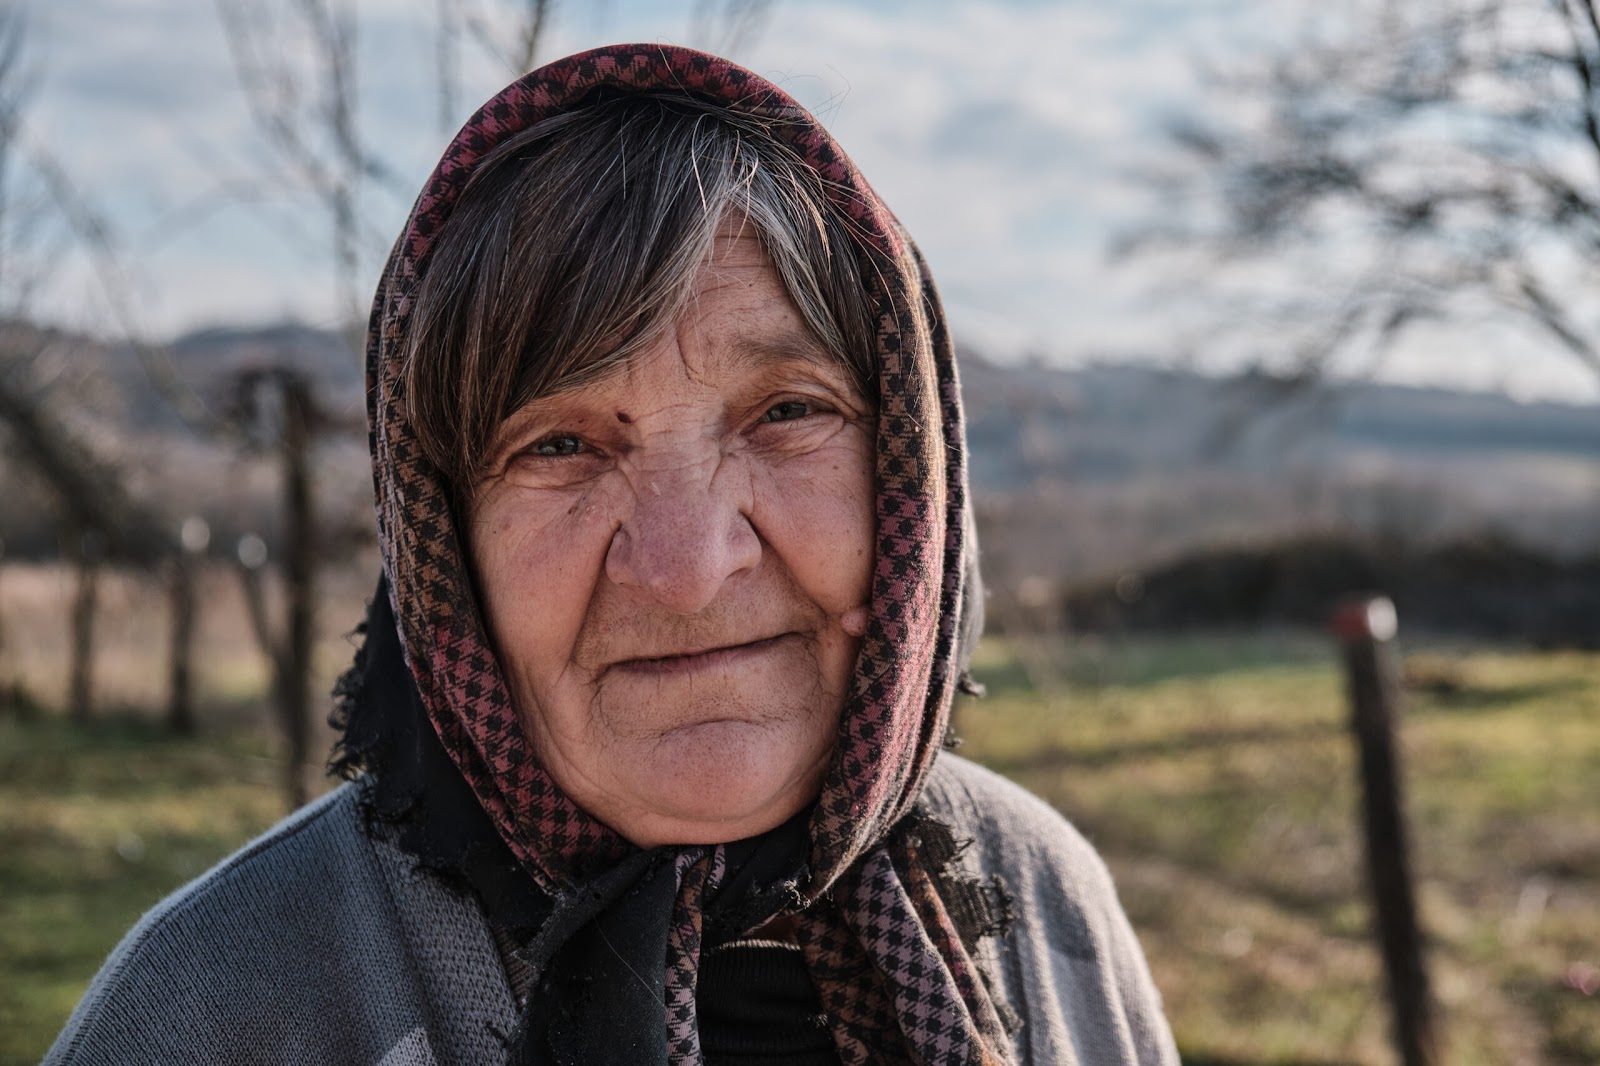 Mara, poses for a portrait in her village near the border with Croatia. | Photo: Chiara Fabbro